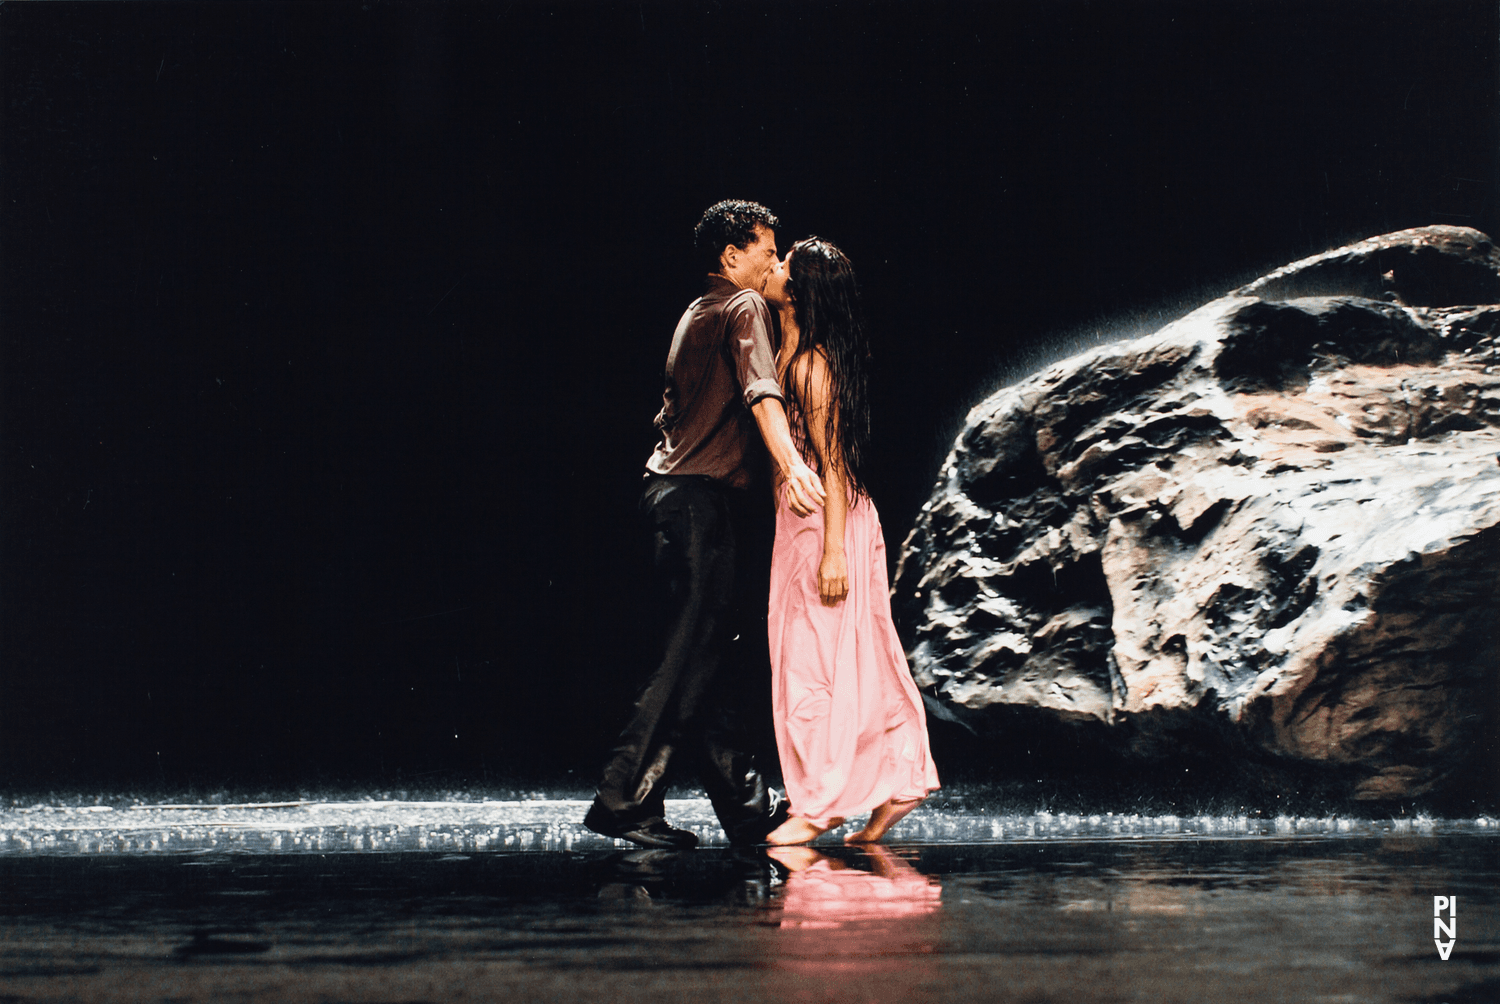 Fernando Suels Mendoza and Silvia Farias Heredia in “Vollmond (Full Moon)” by Pina Bausch, Sept. 27, 2006